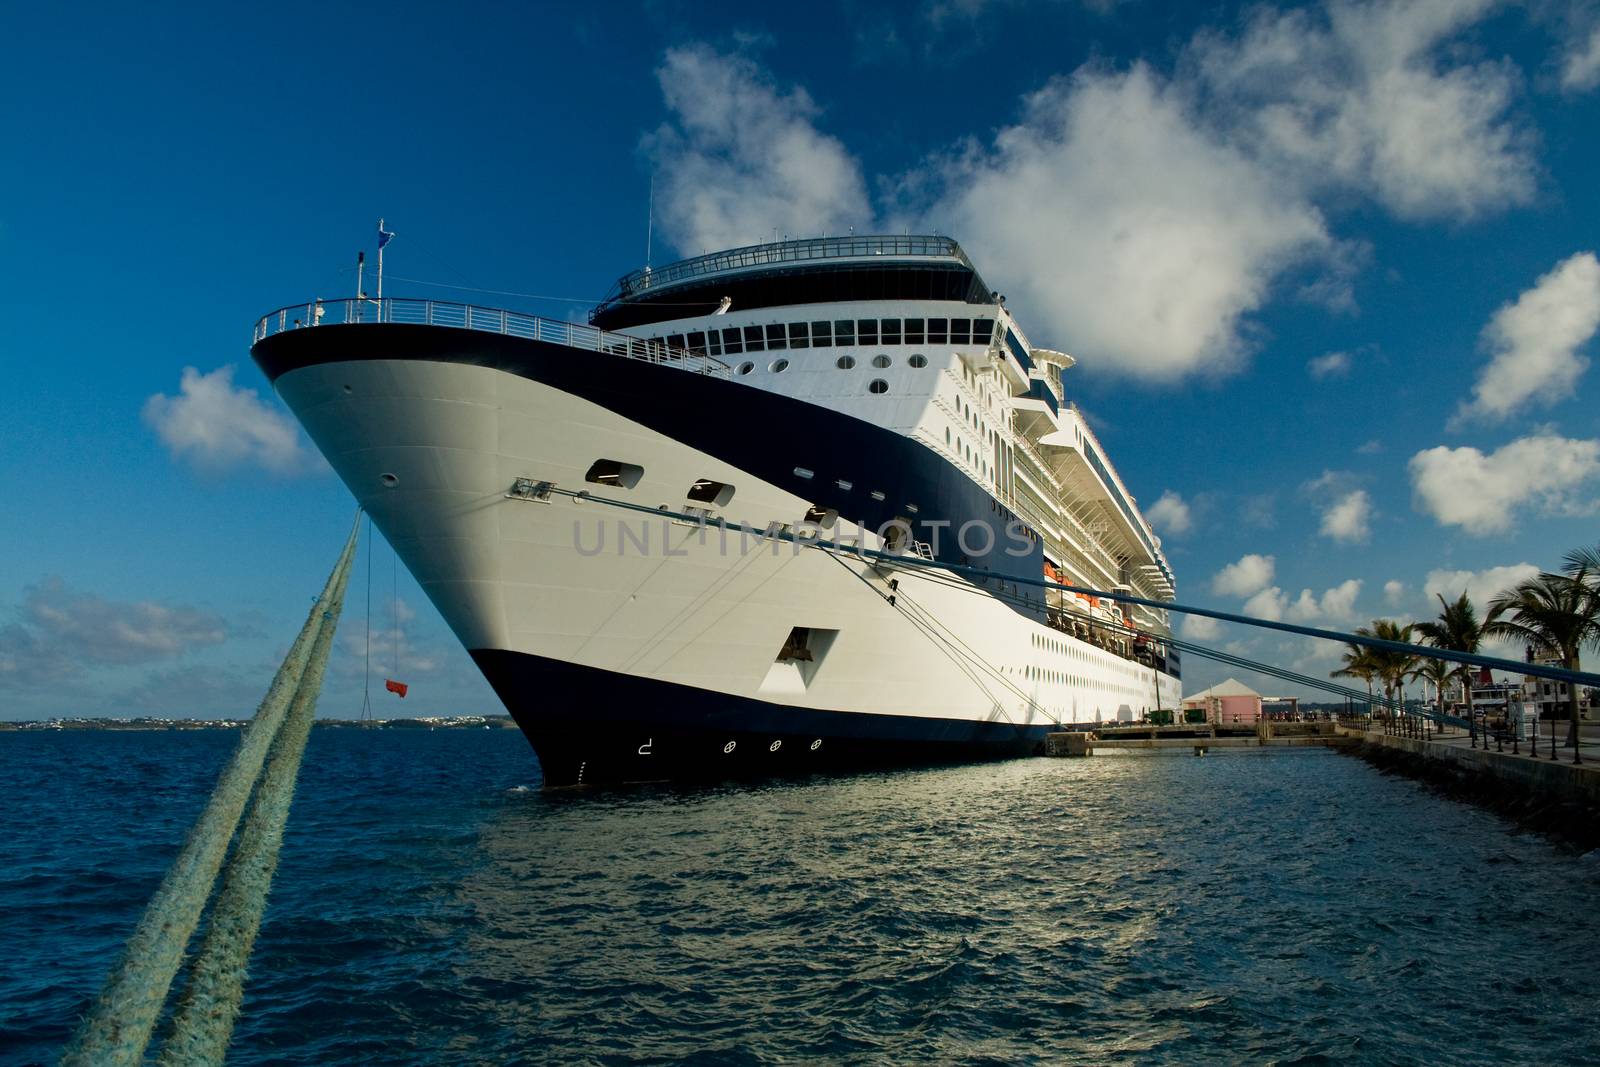 A cruise ship docked in Bermuda